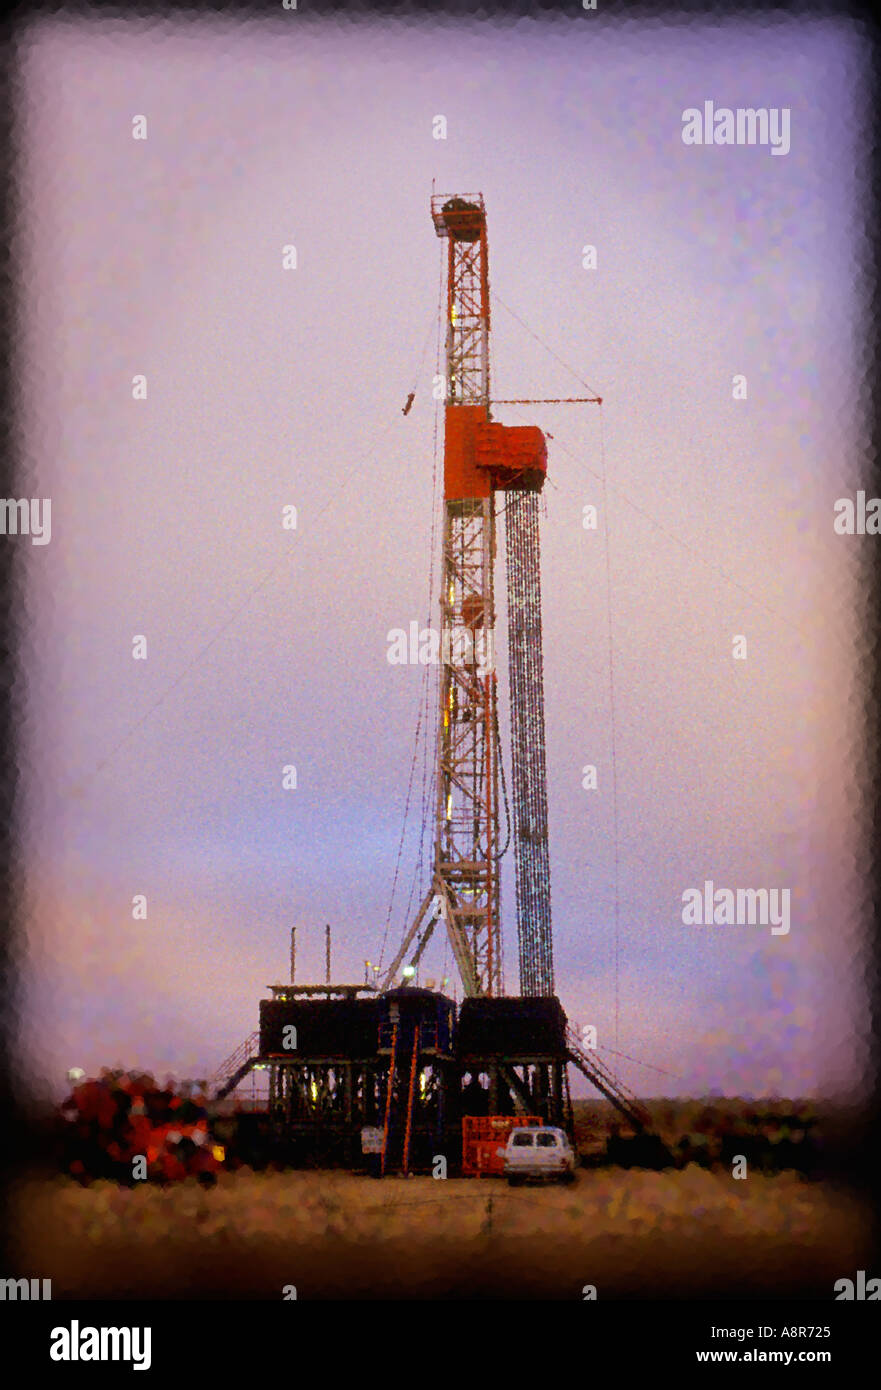 Oil Exploration Rig Stock Photo